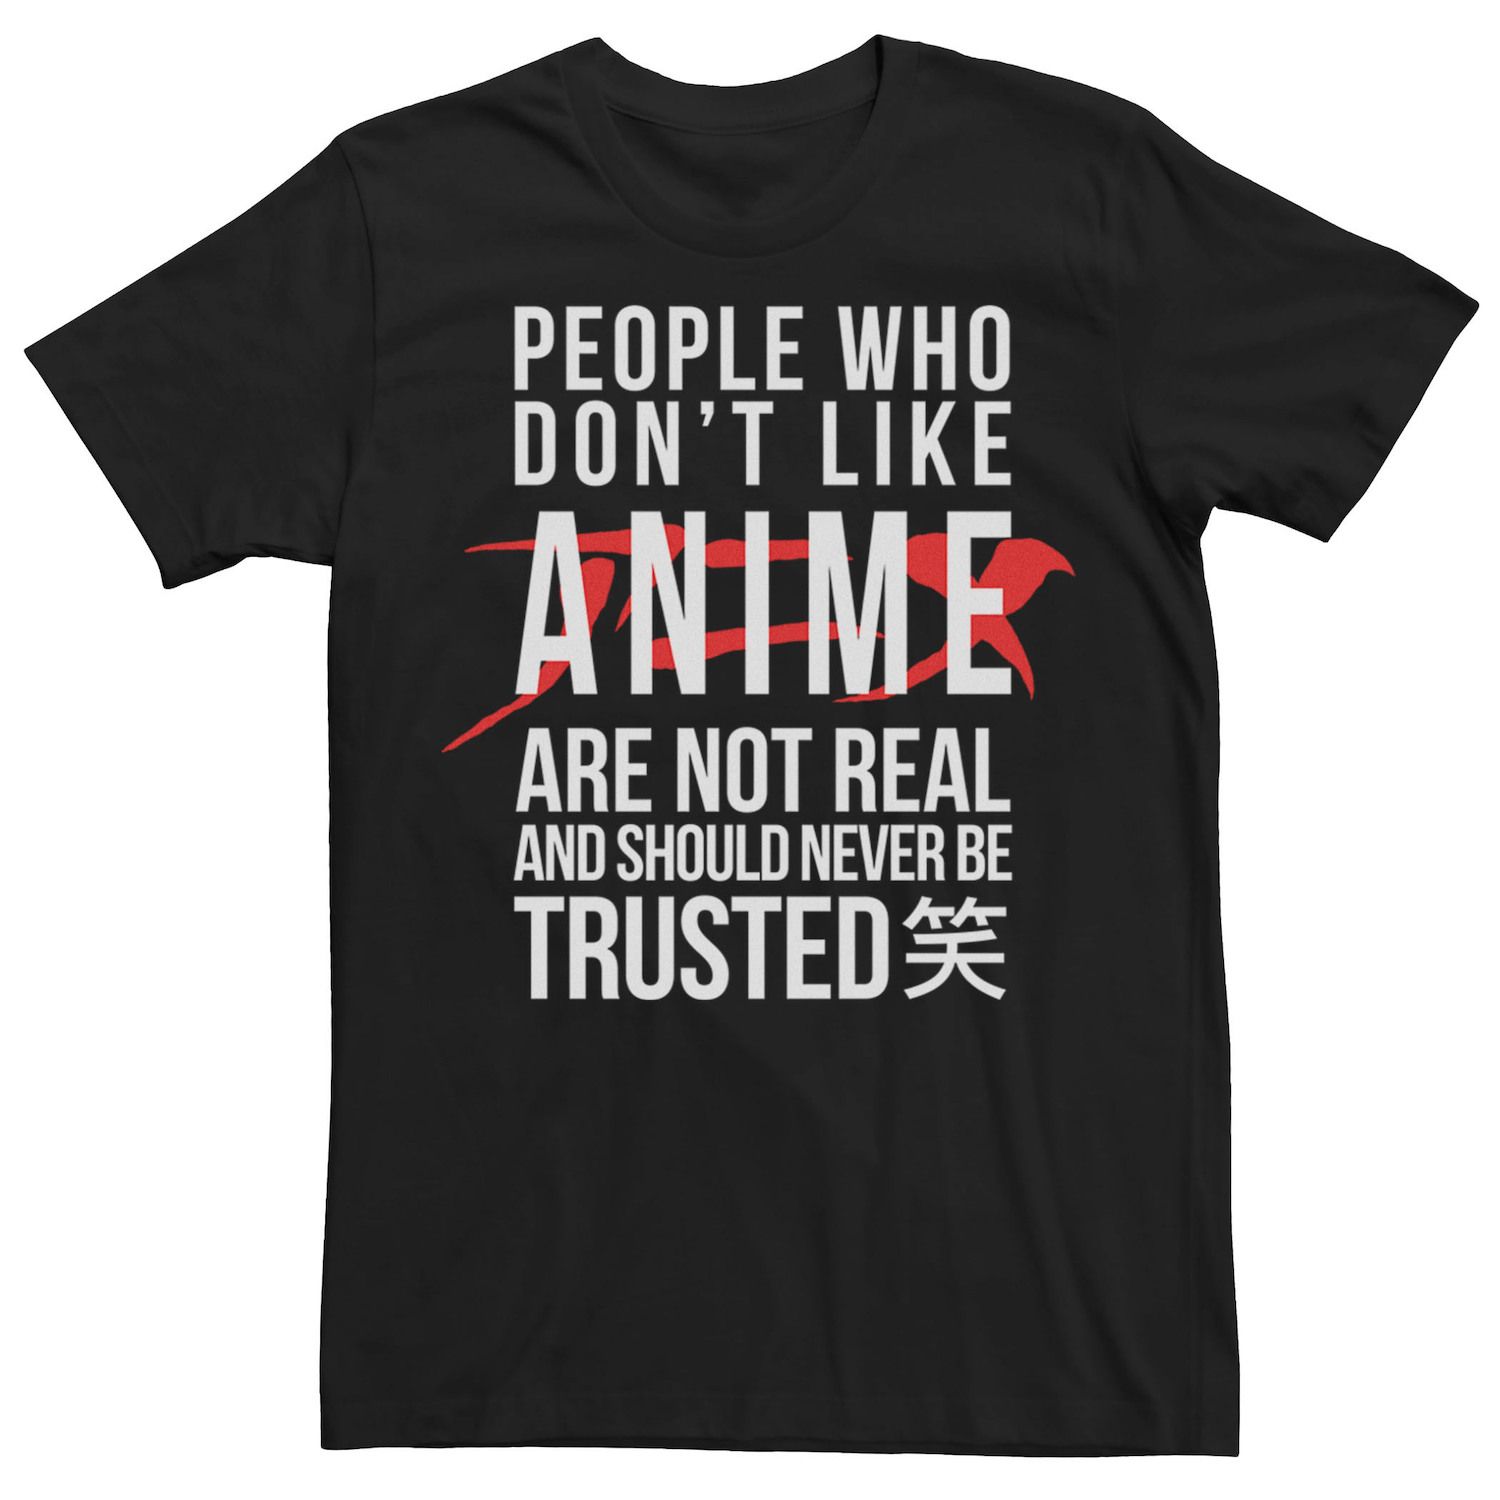 Мужская футболка с надписью Fifth Sun Anime People Licensed Character мужская футболка с надписью fifth sun summer plans licensed character